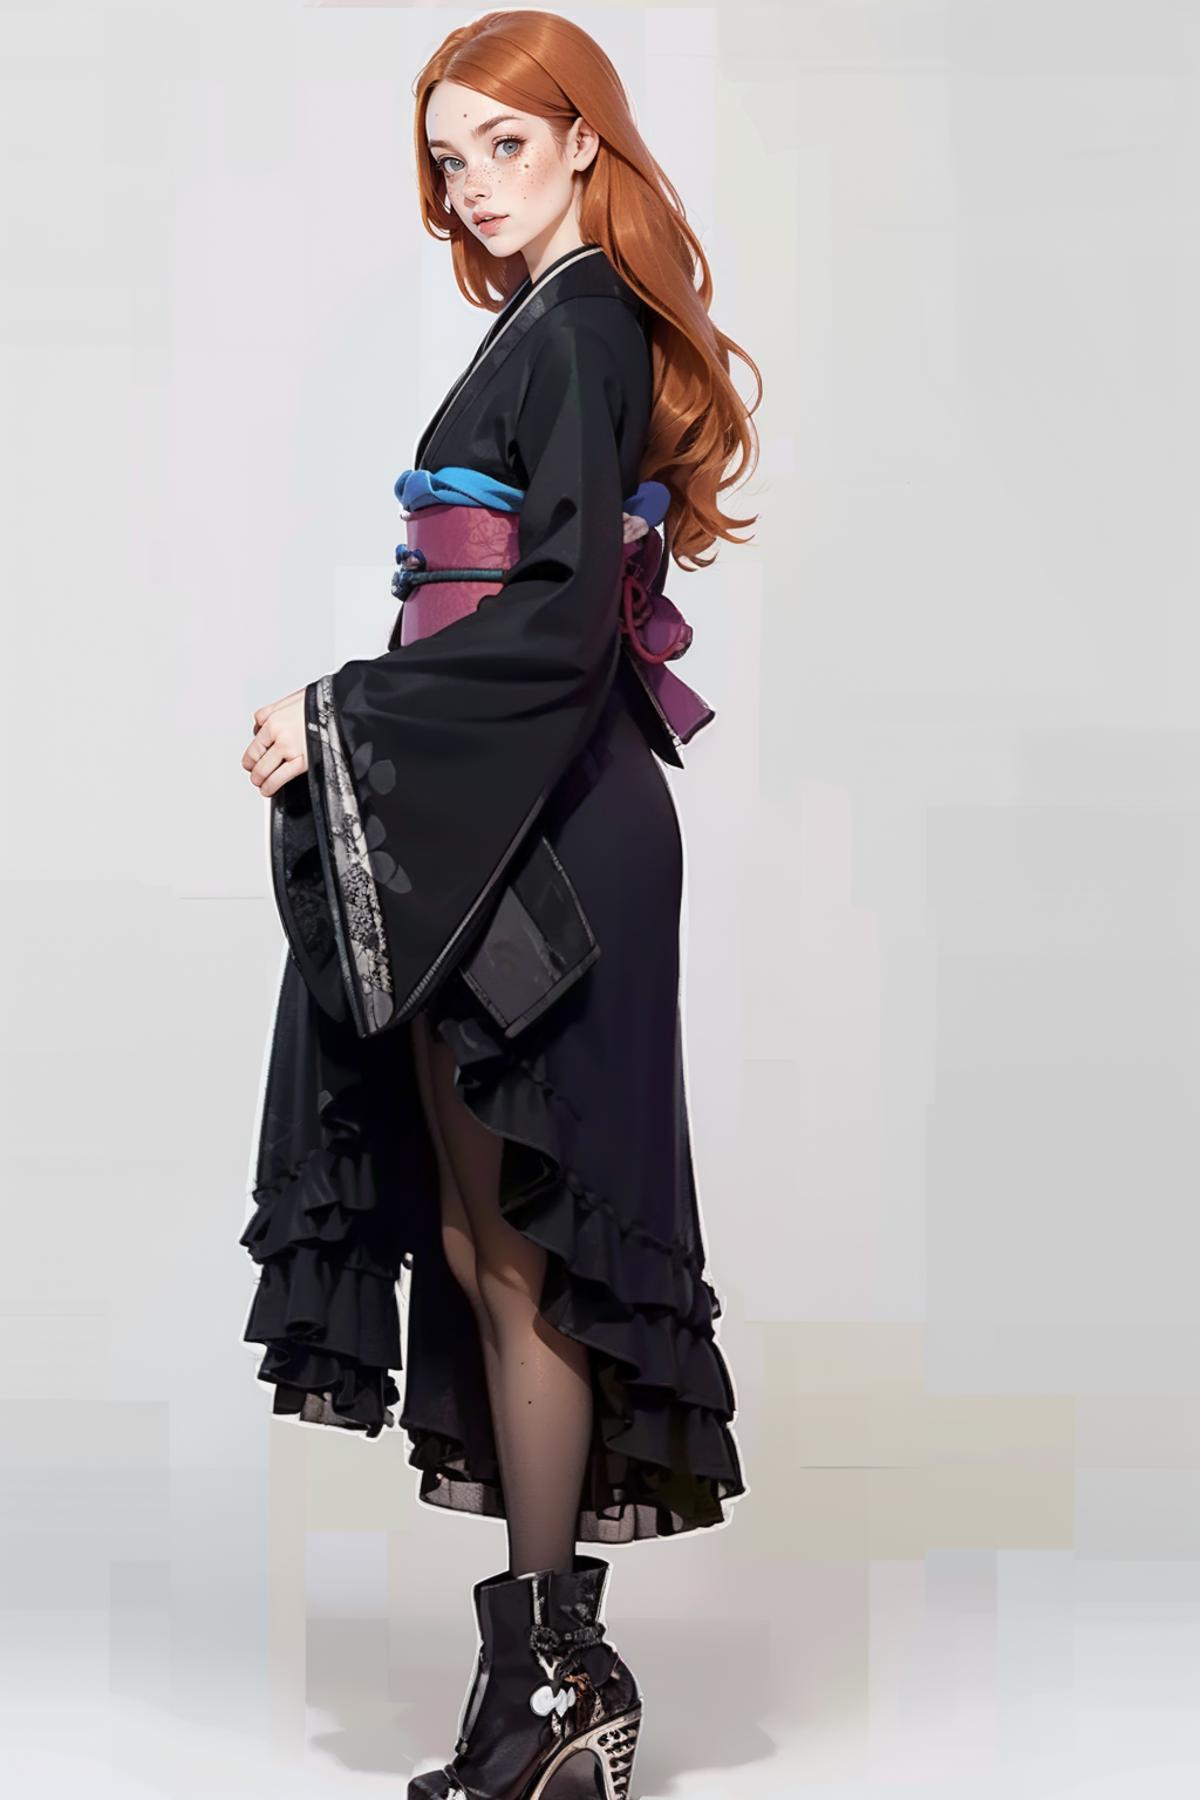 Gothic Kimono image by freckledvixon